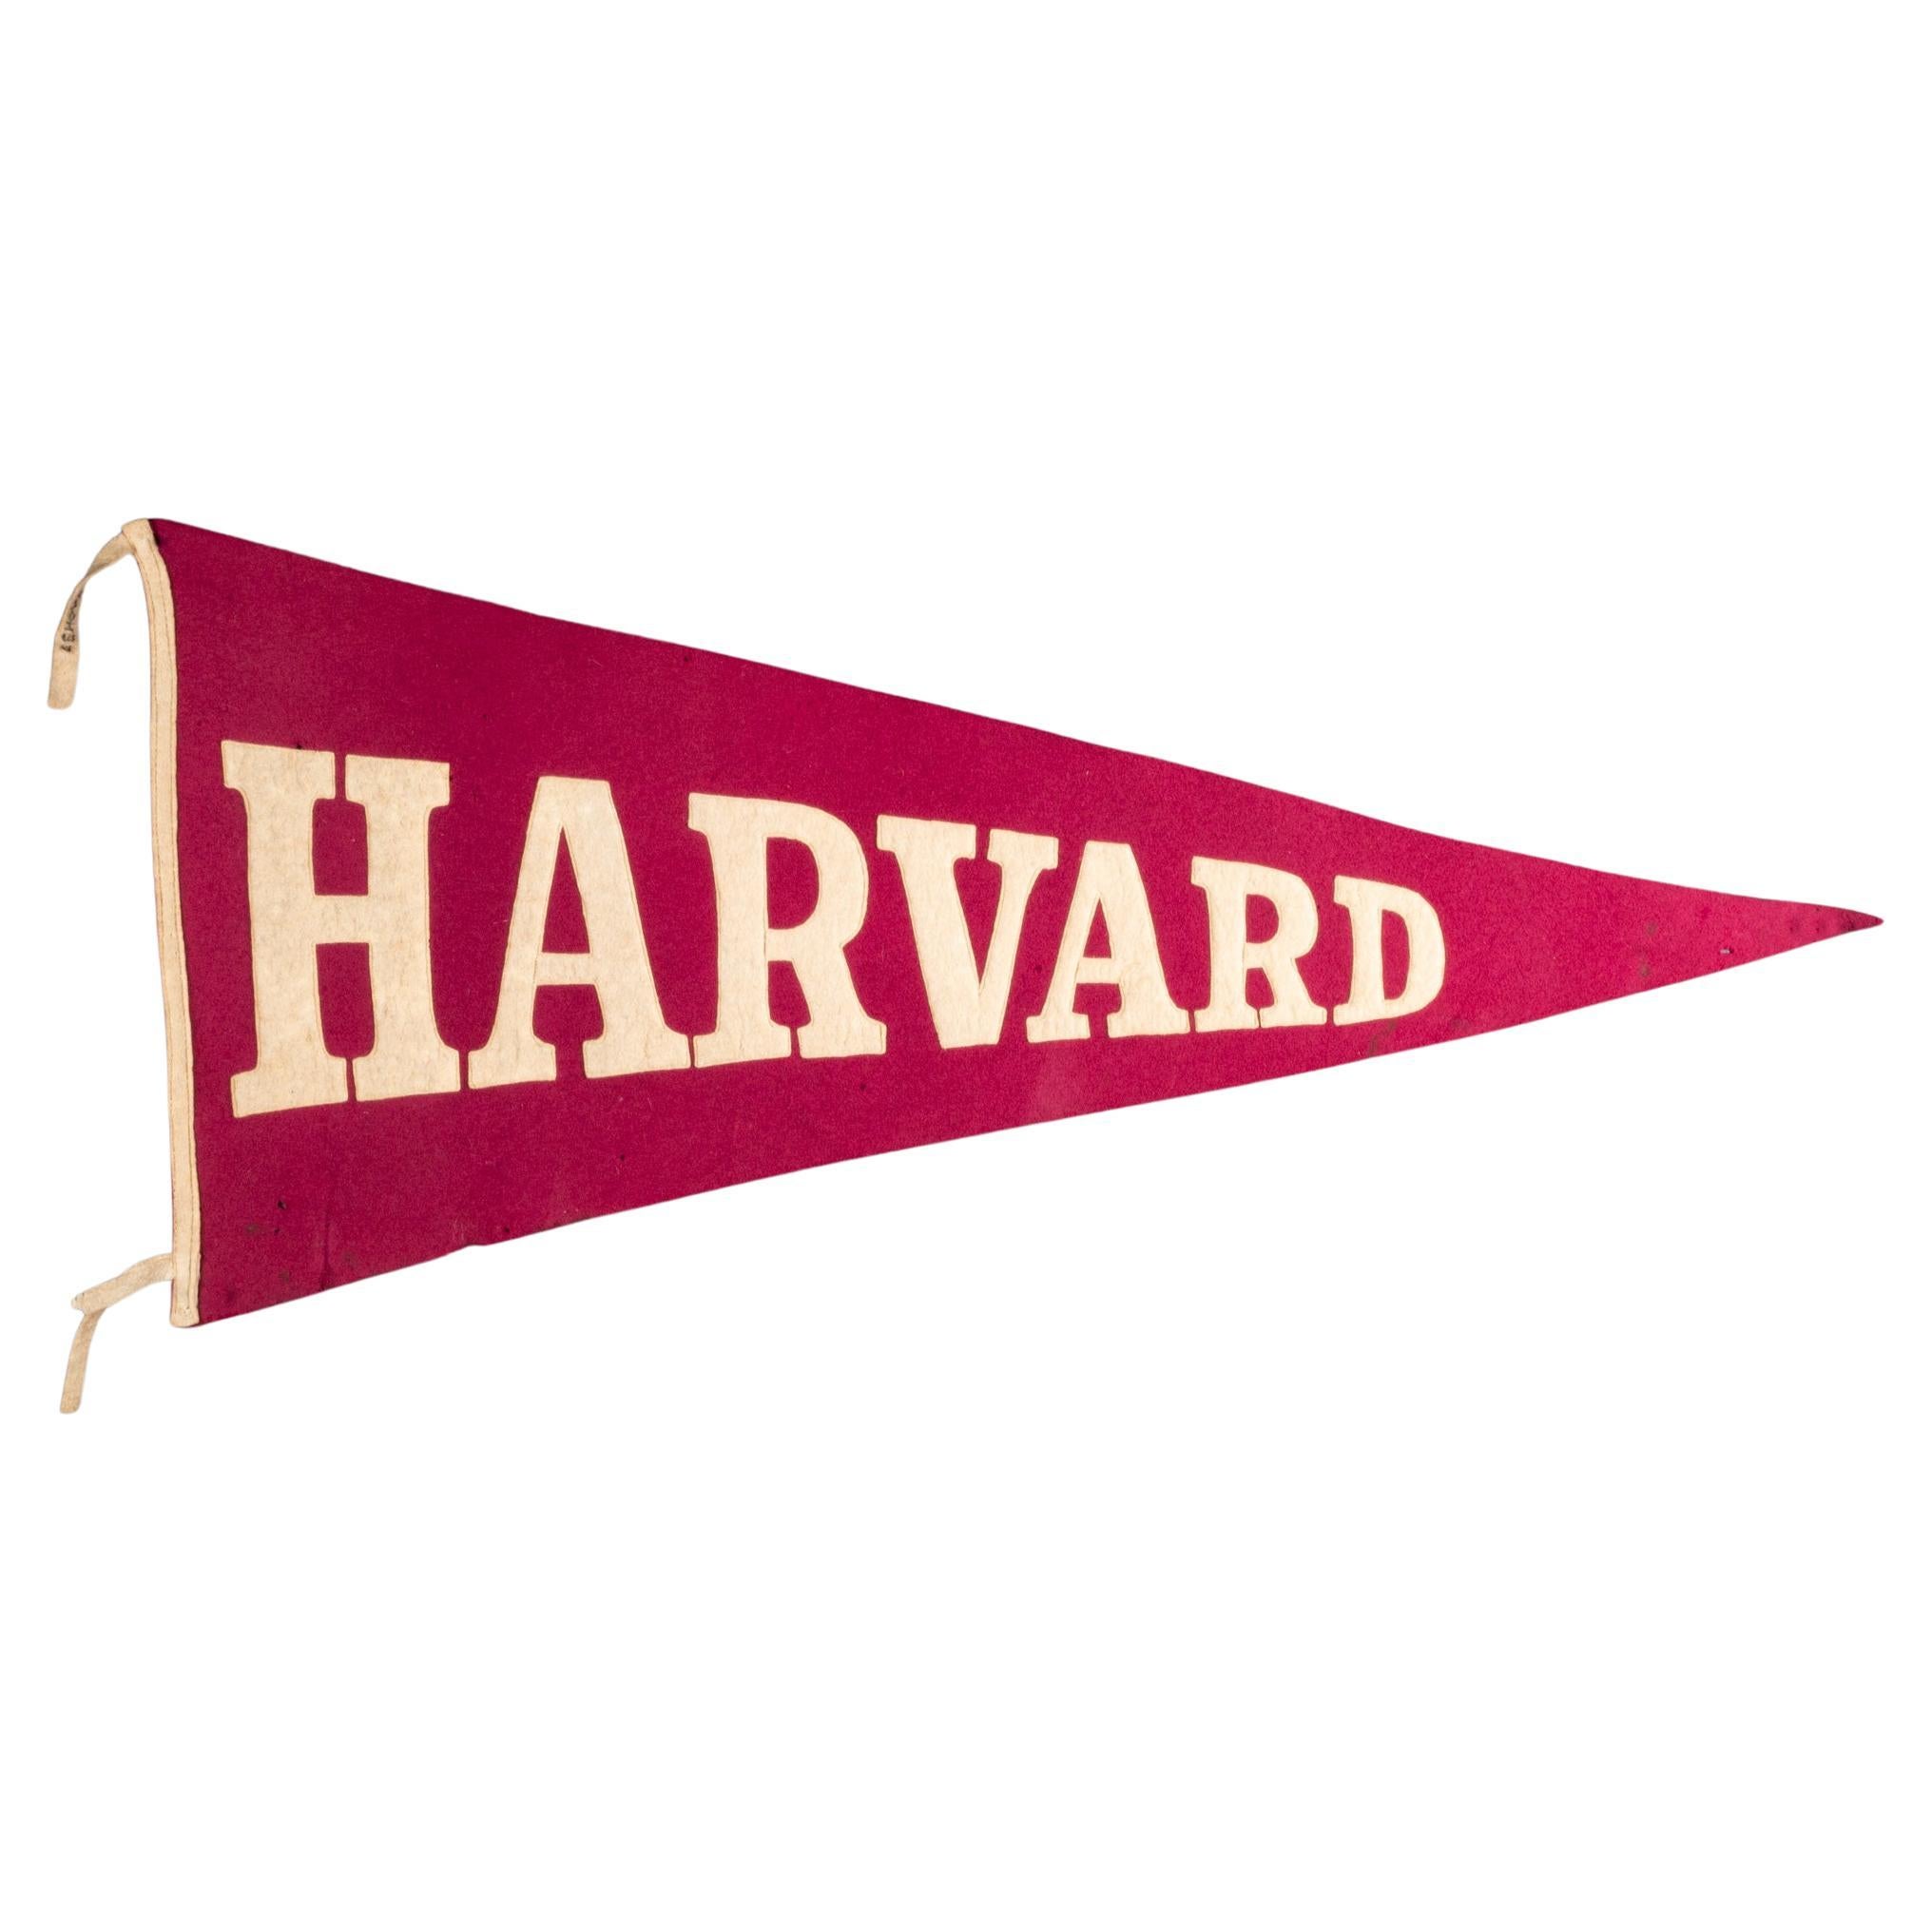 Harvard University Pennant Banner, circa 1920-1940